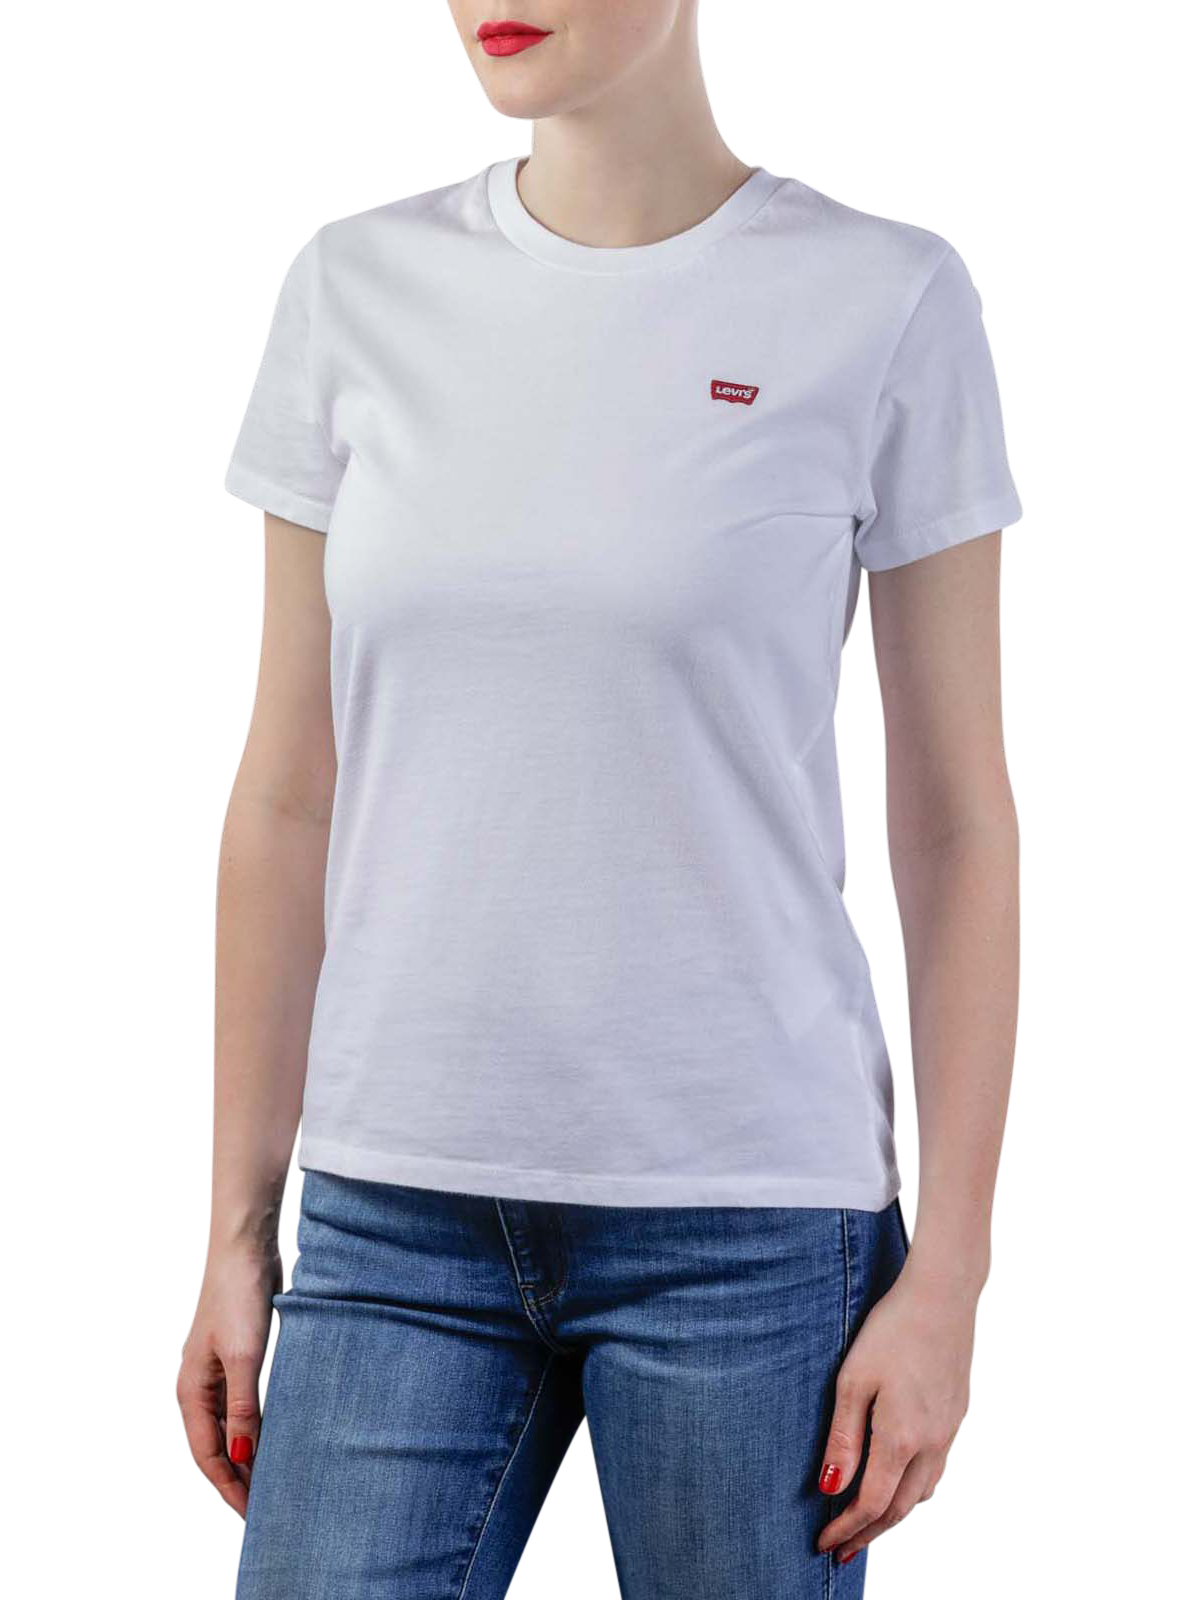 Levi's Perfect Tee Shirt white cn-100xx | free shipping ... - Levi Clothes